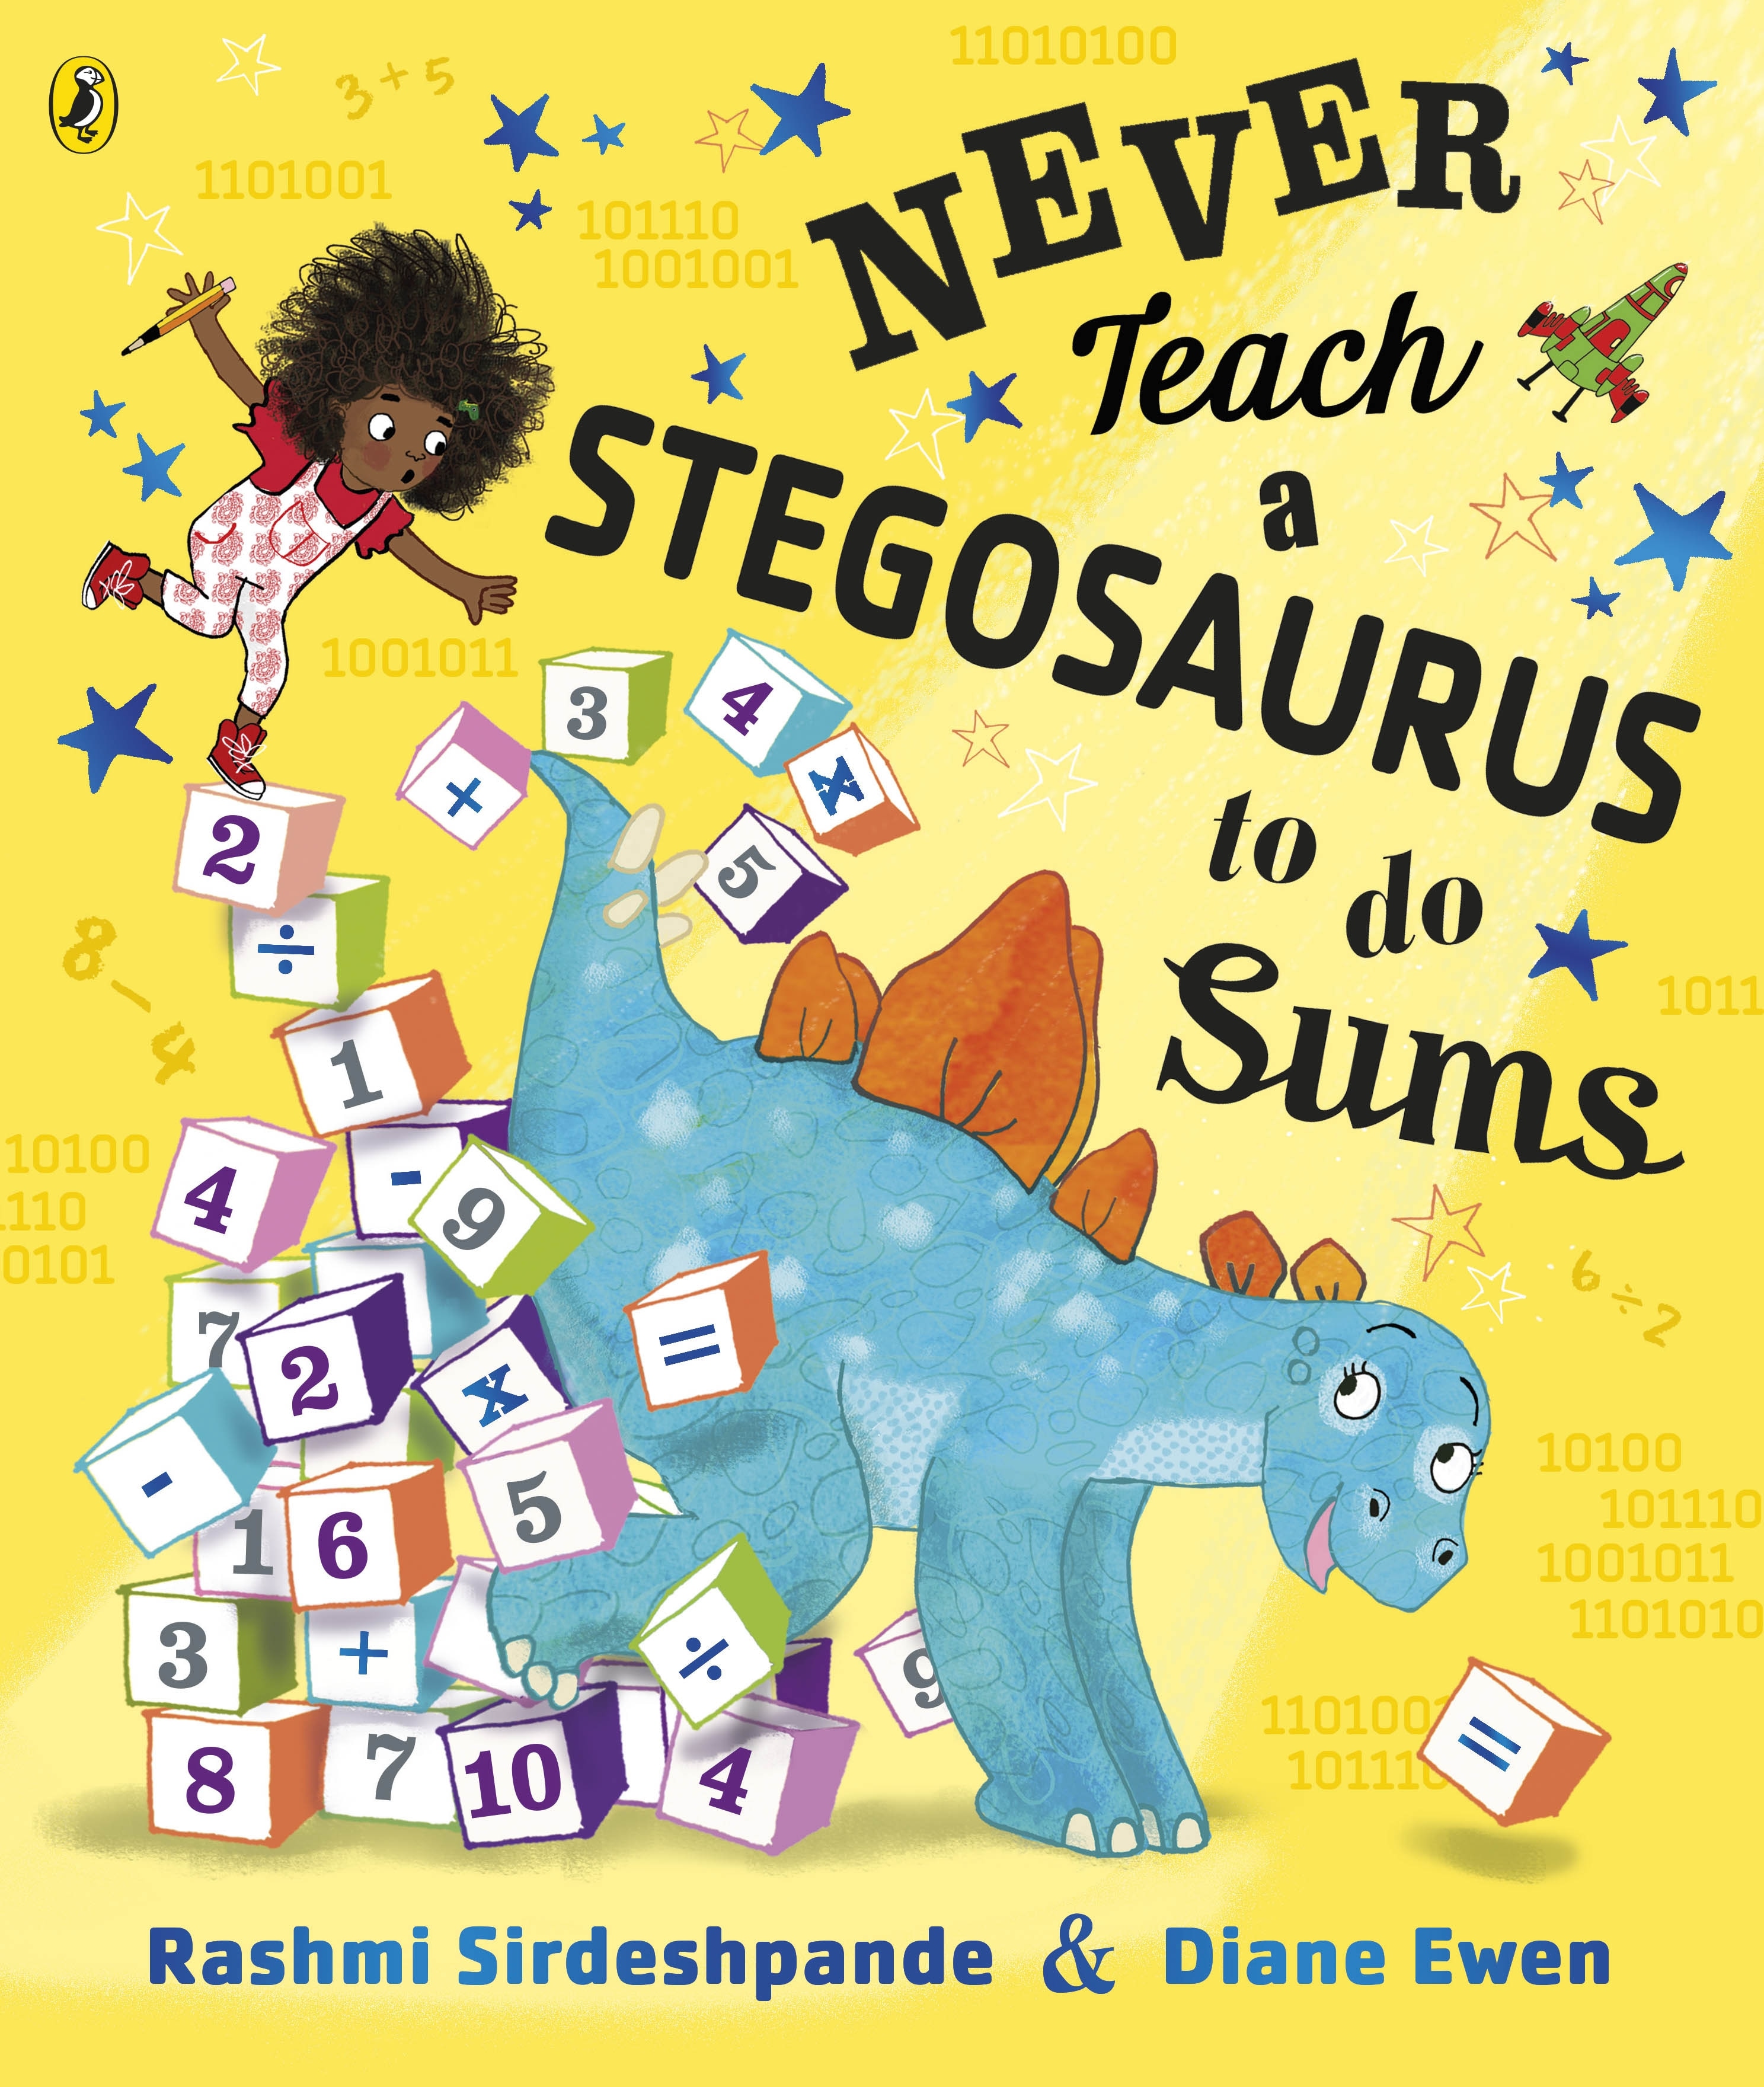 Book “Never Teach a Stegosaurus to Do Sums” by Rashmi Sirdeshpande — May 27, 2021